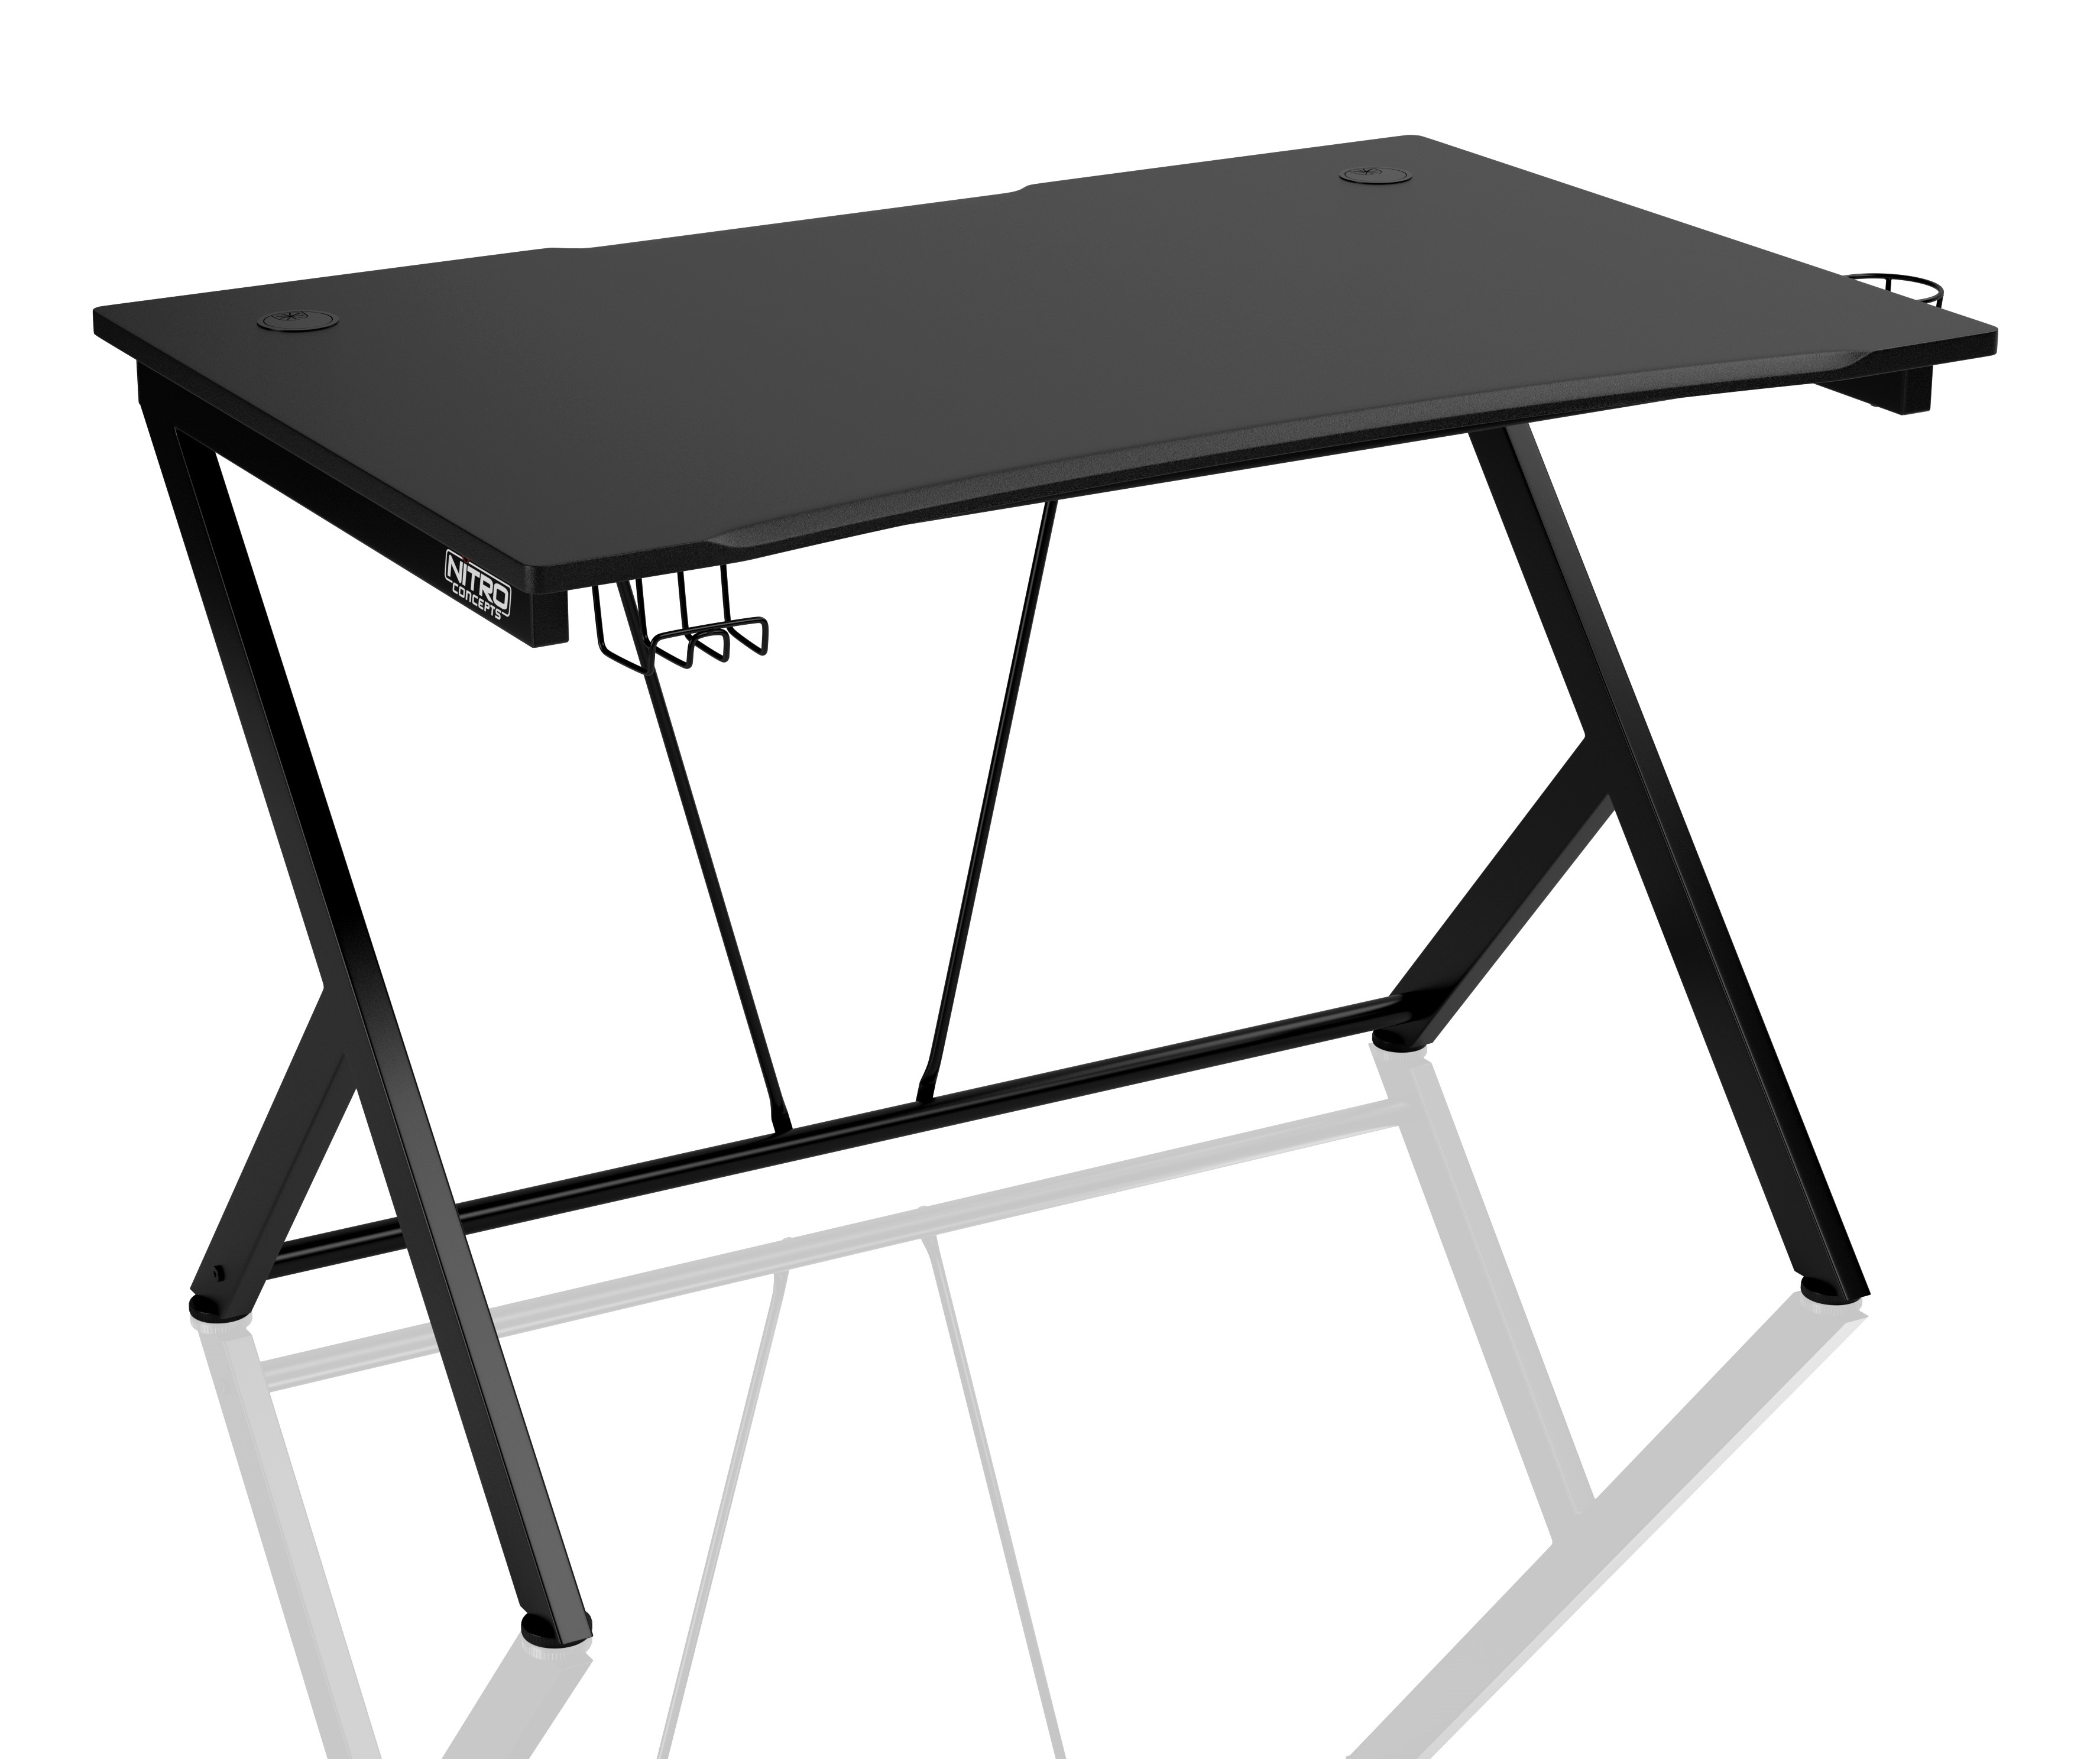  - Nitro Concepts D12 Gaming Desk - Black